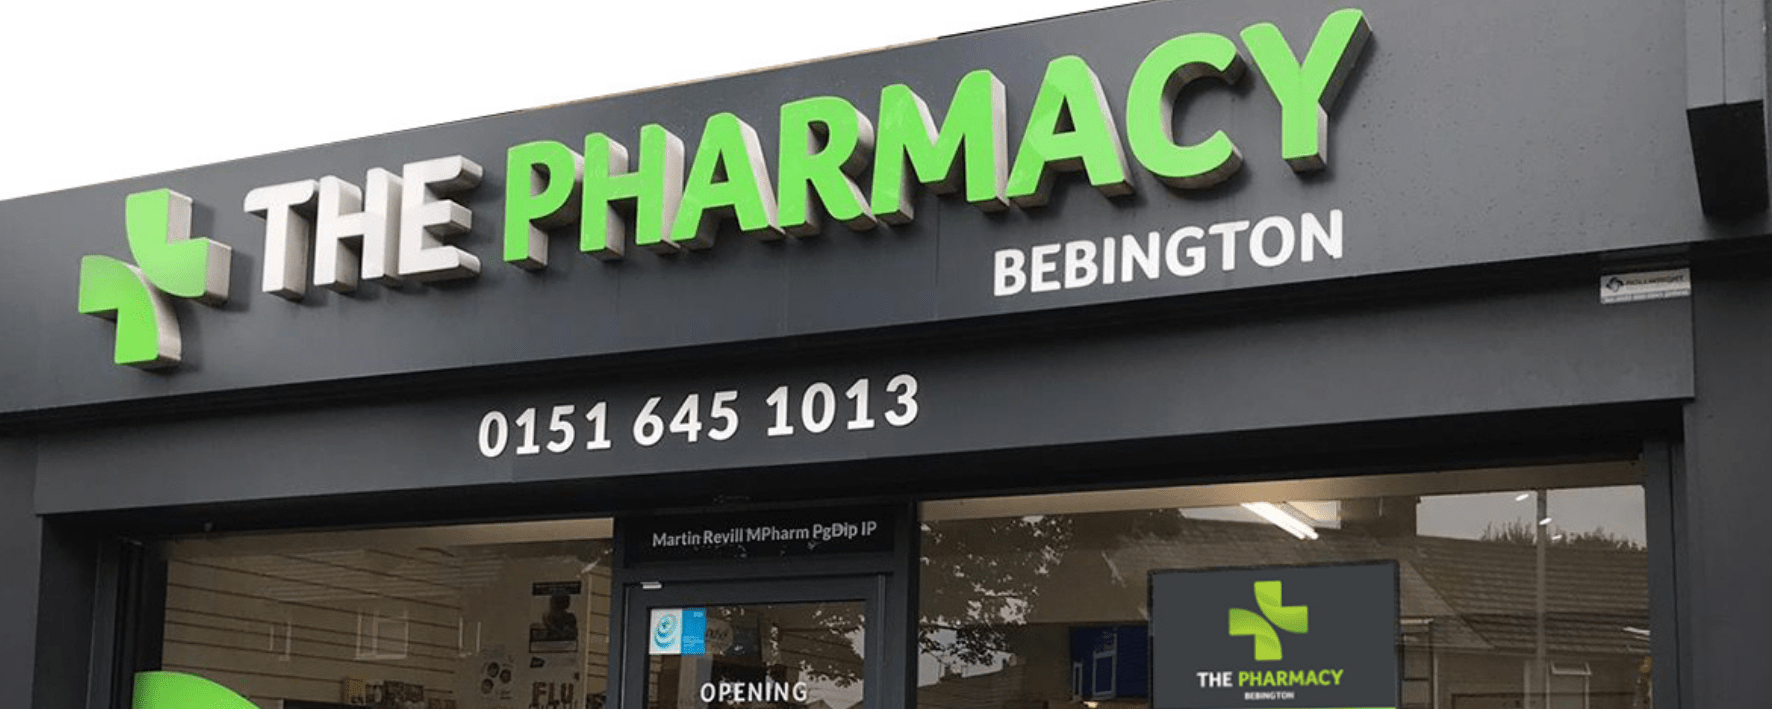 The Pharmacy Bebington